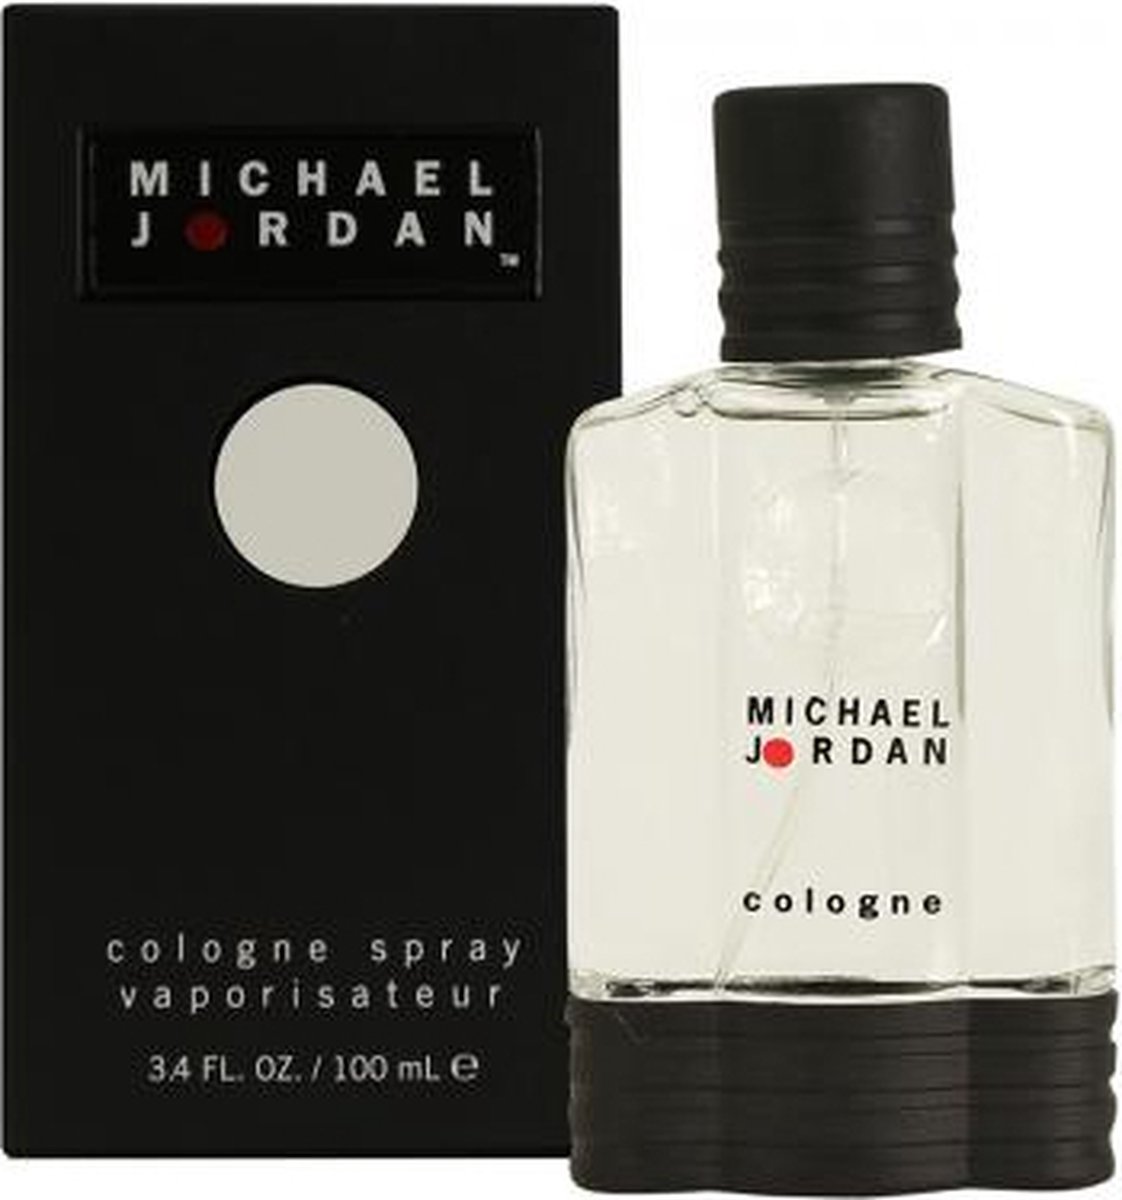 JORDAN by Michael Jordan 100 ml - Cologne Spray